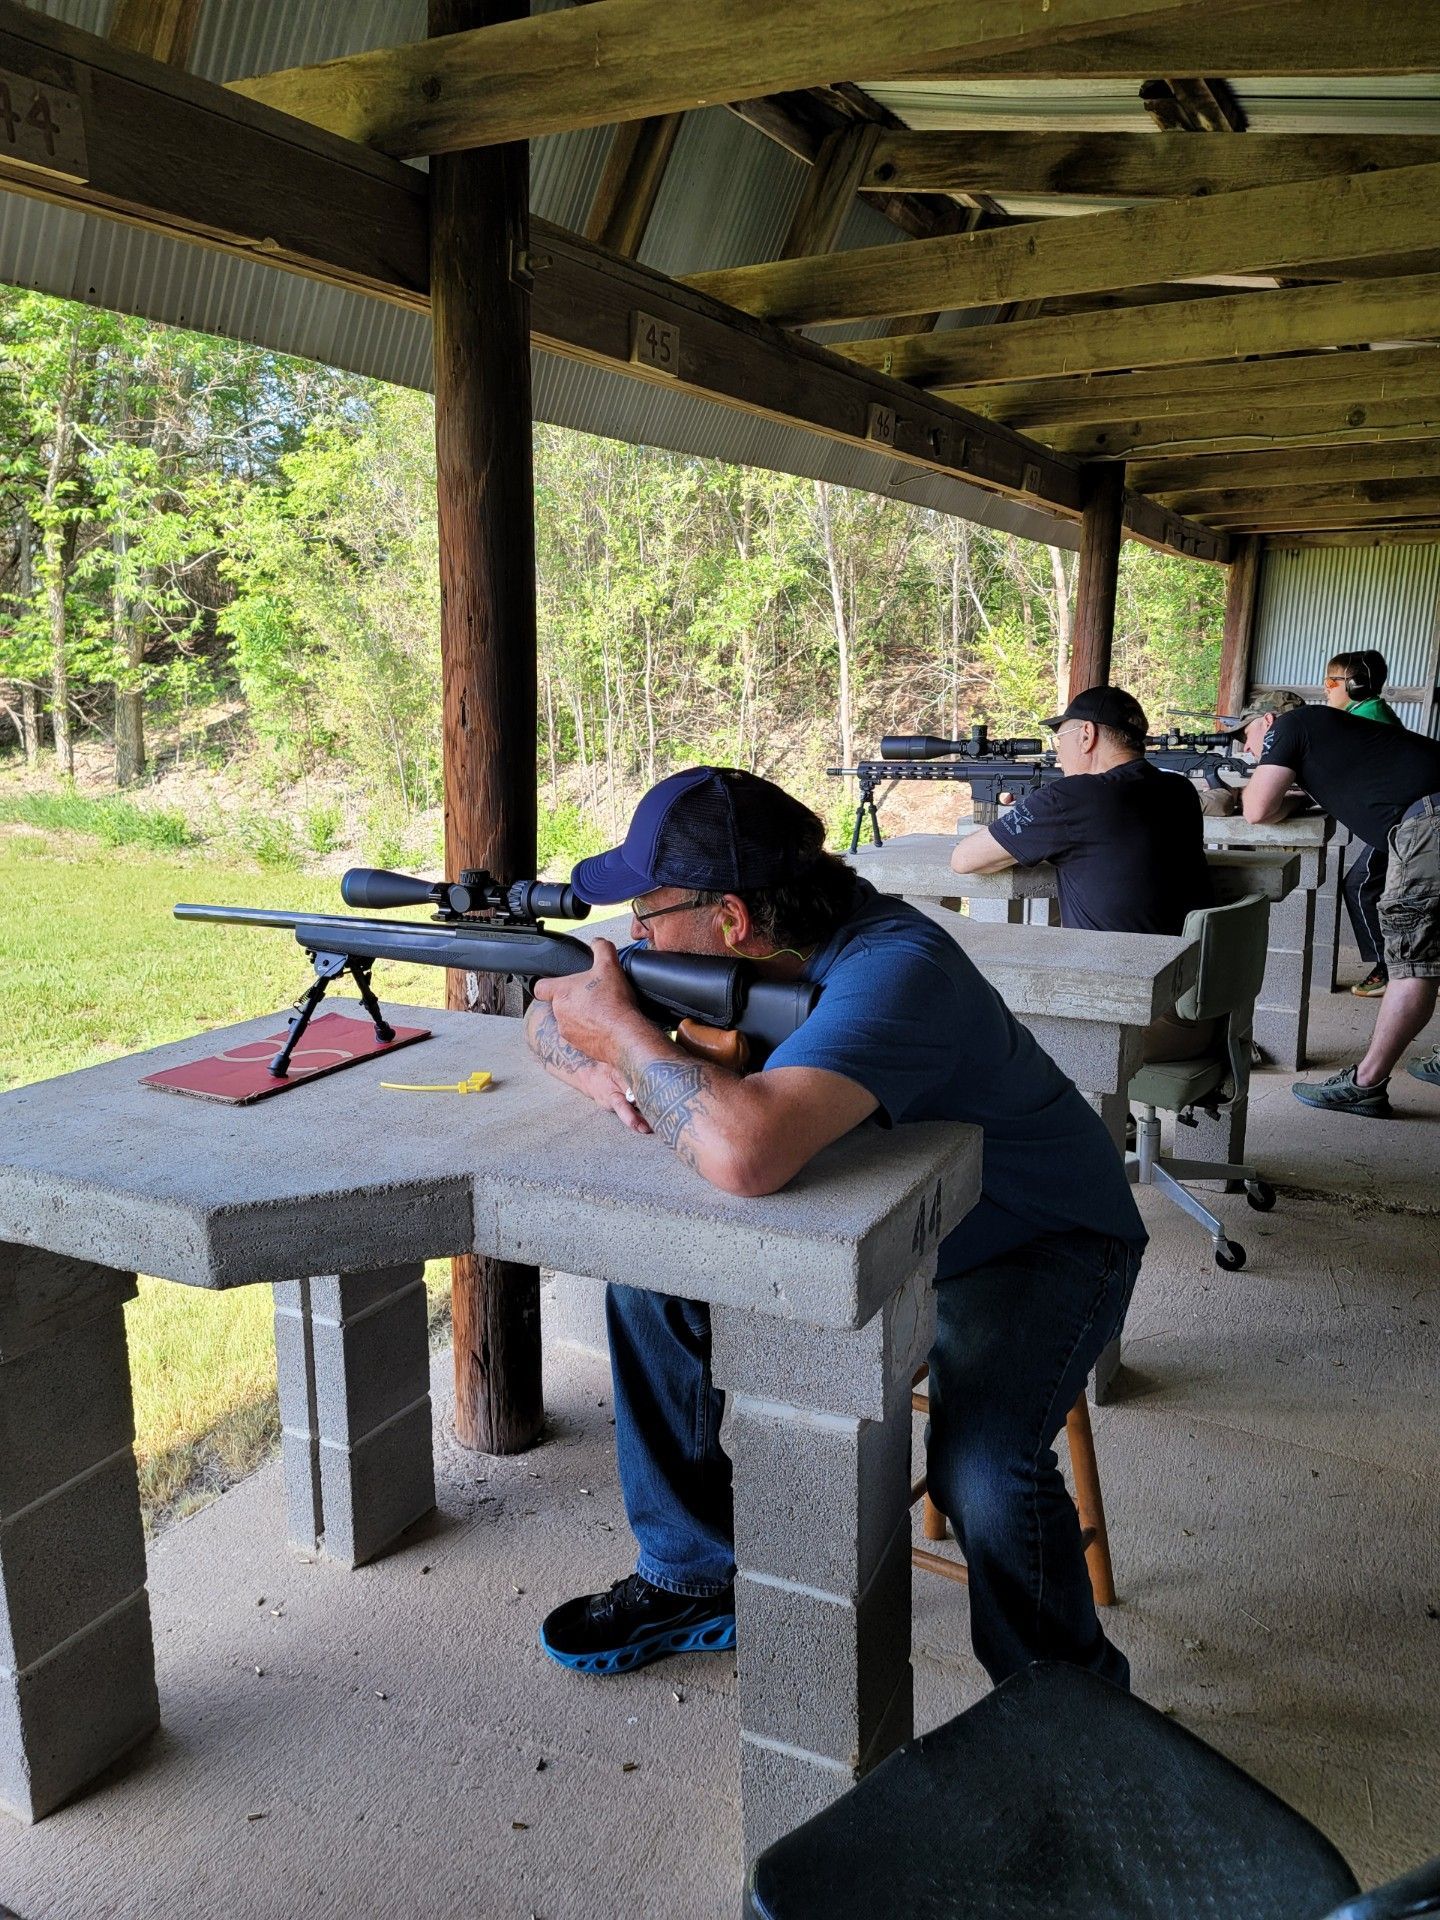 man in blue shirt and blue hat aiming rifle at gun range